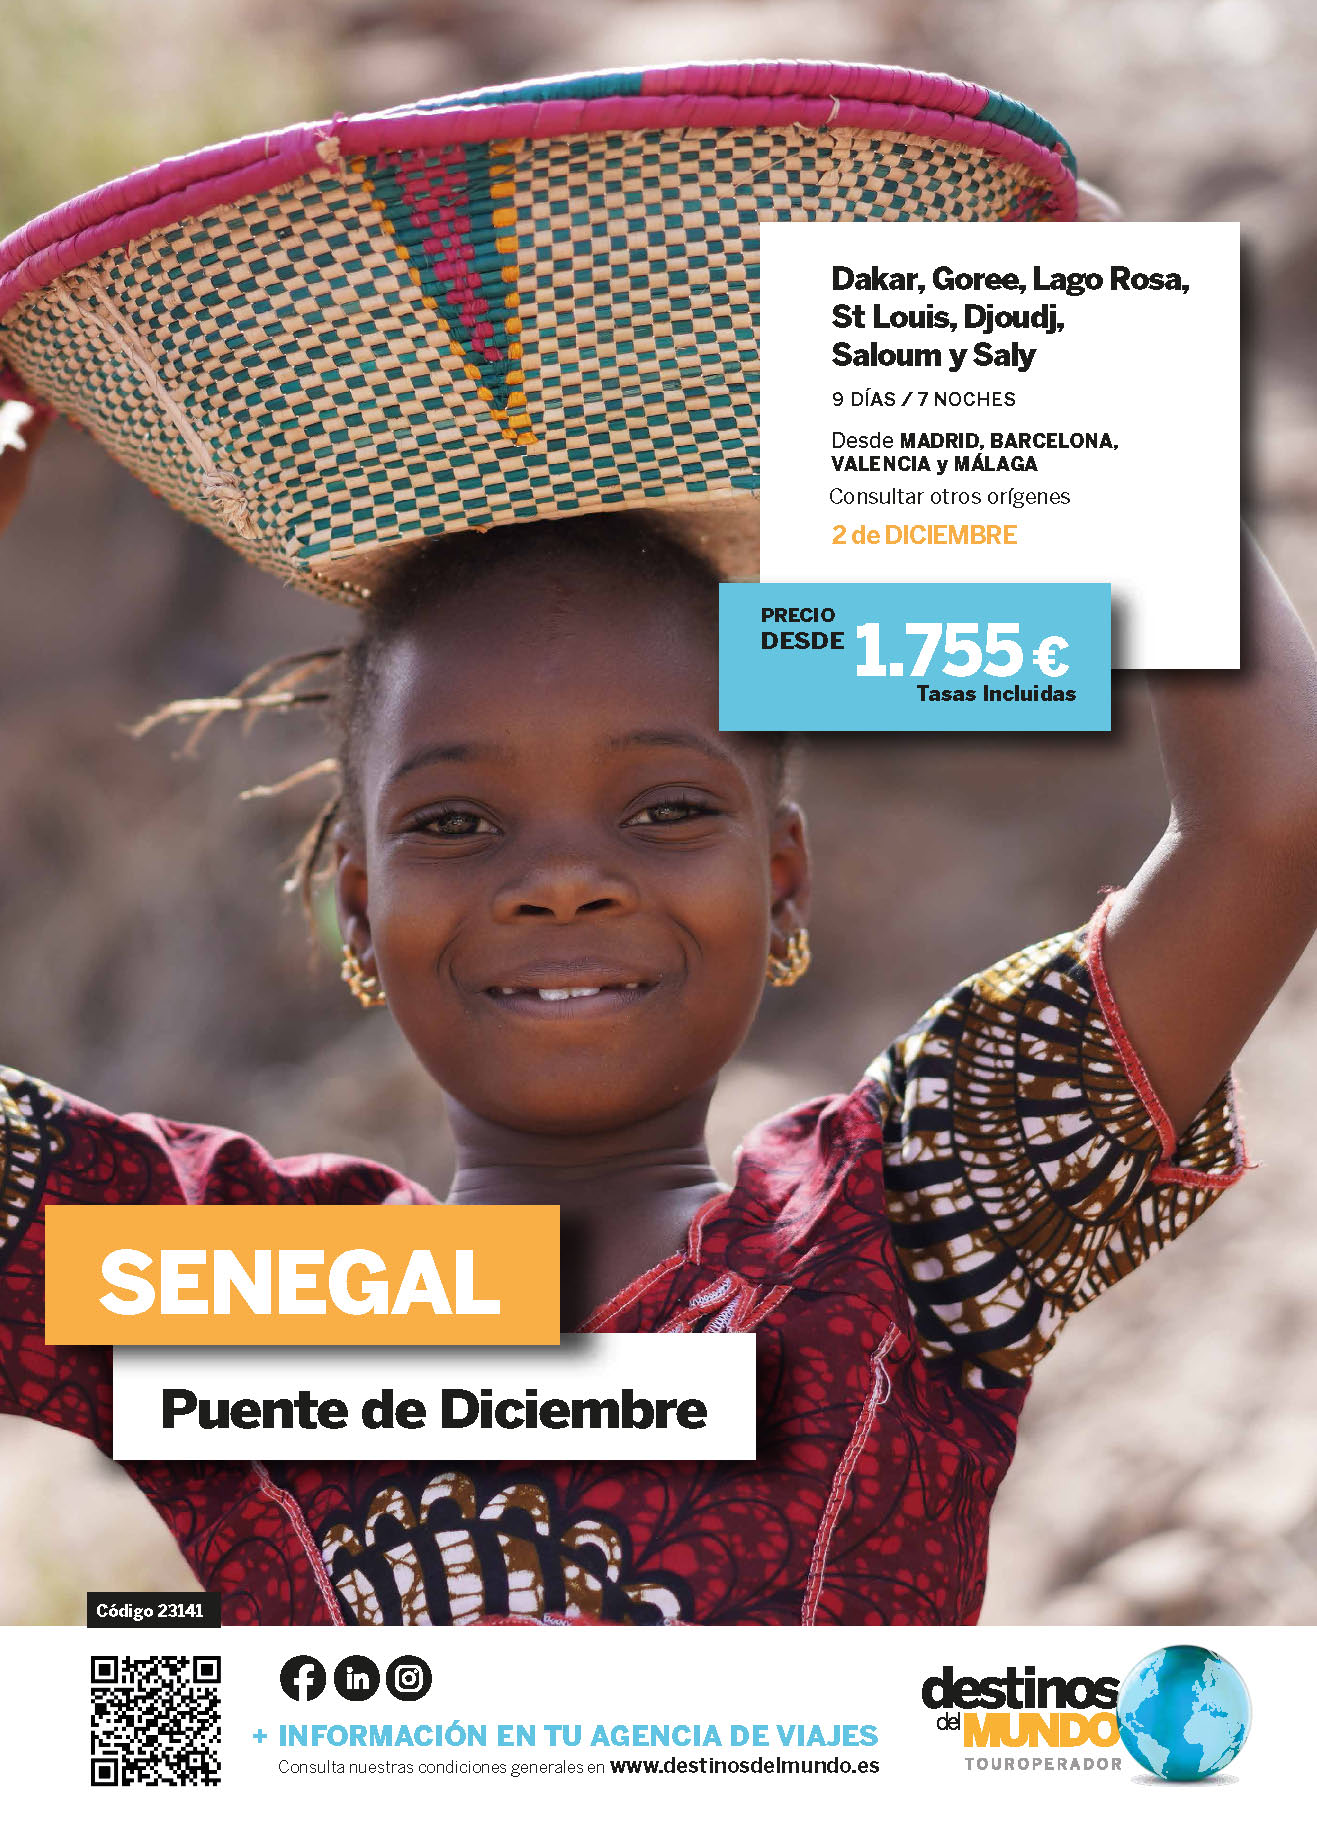 Oferta Destinos del Mundo Puente de Diciembre 2023 circuito Senegal 9 dias salidas 2 diciembredesde Madrid Barcelona Malaga Valencia